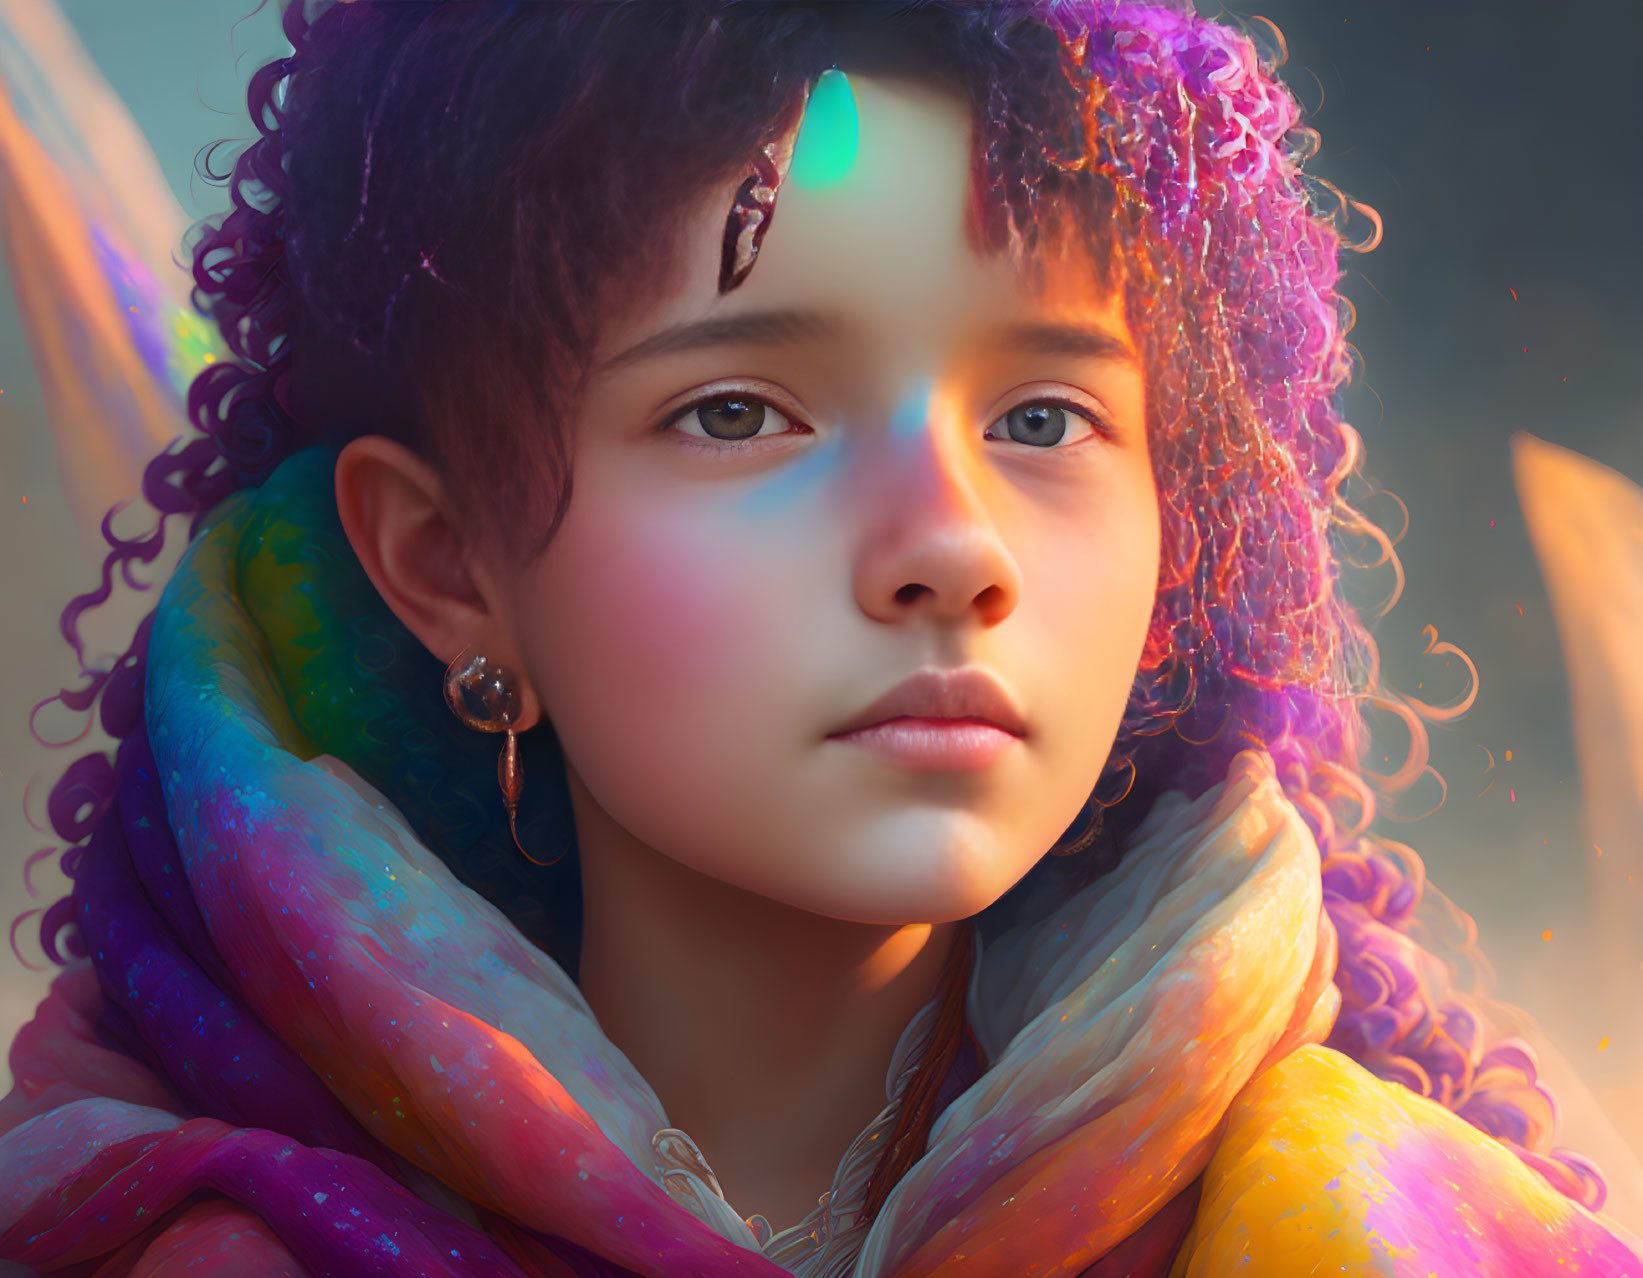 Child's Digital Portrait: Curly Hair, Colorful Attire, Serene Expression